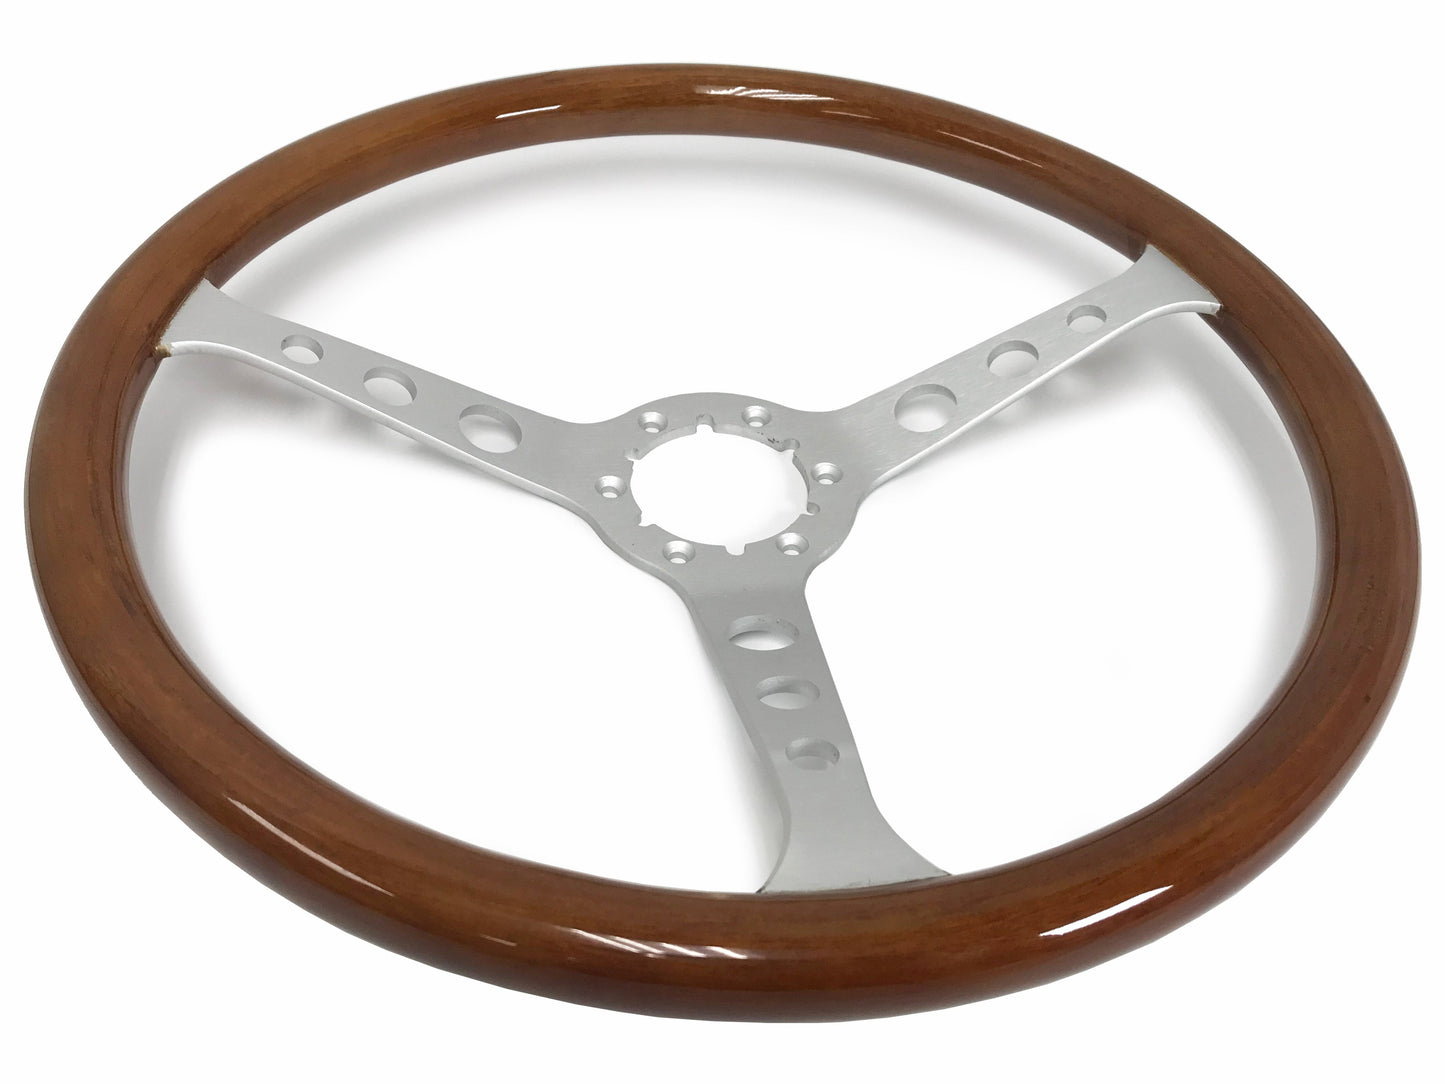 1962-68 Chevy Nova Steering Wheel Kit | Classic Wood | ST3578